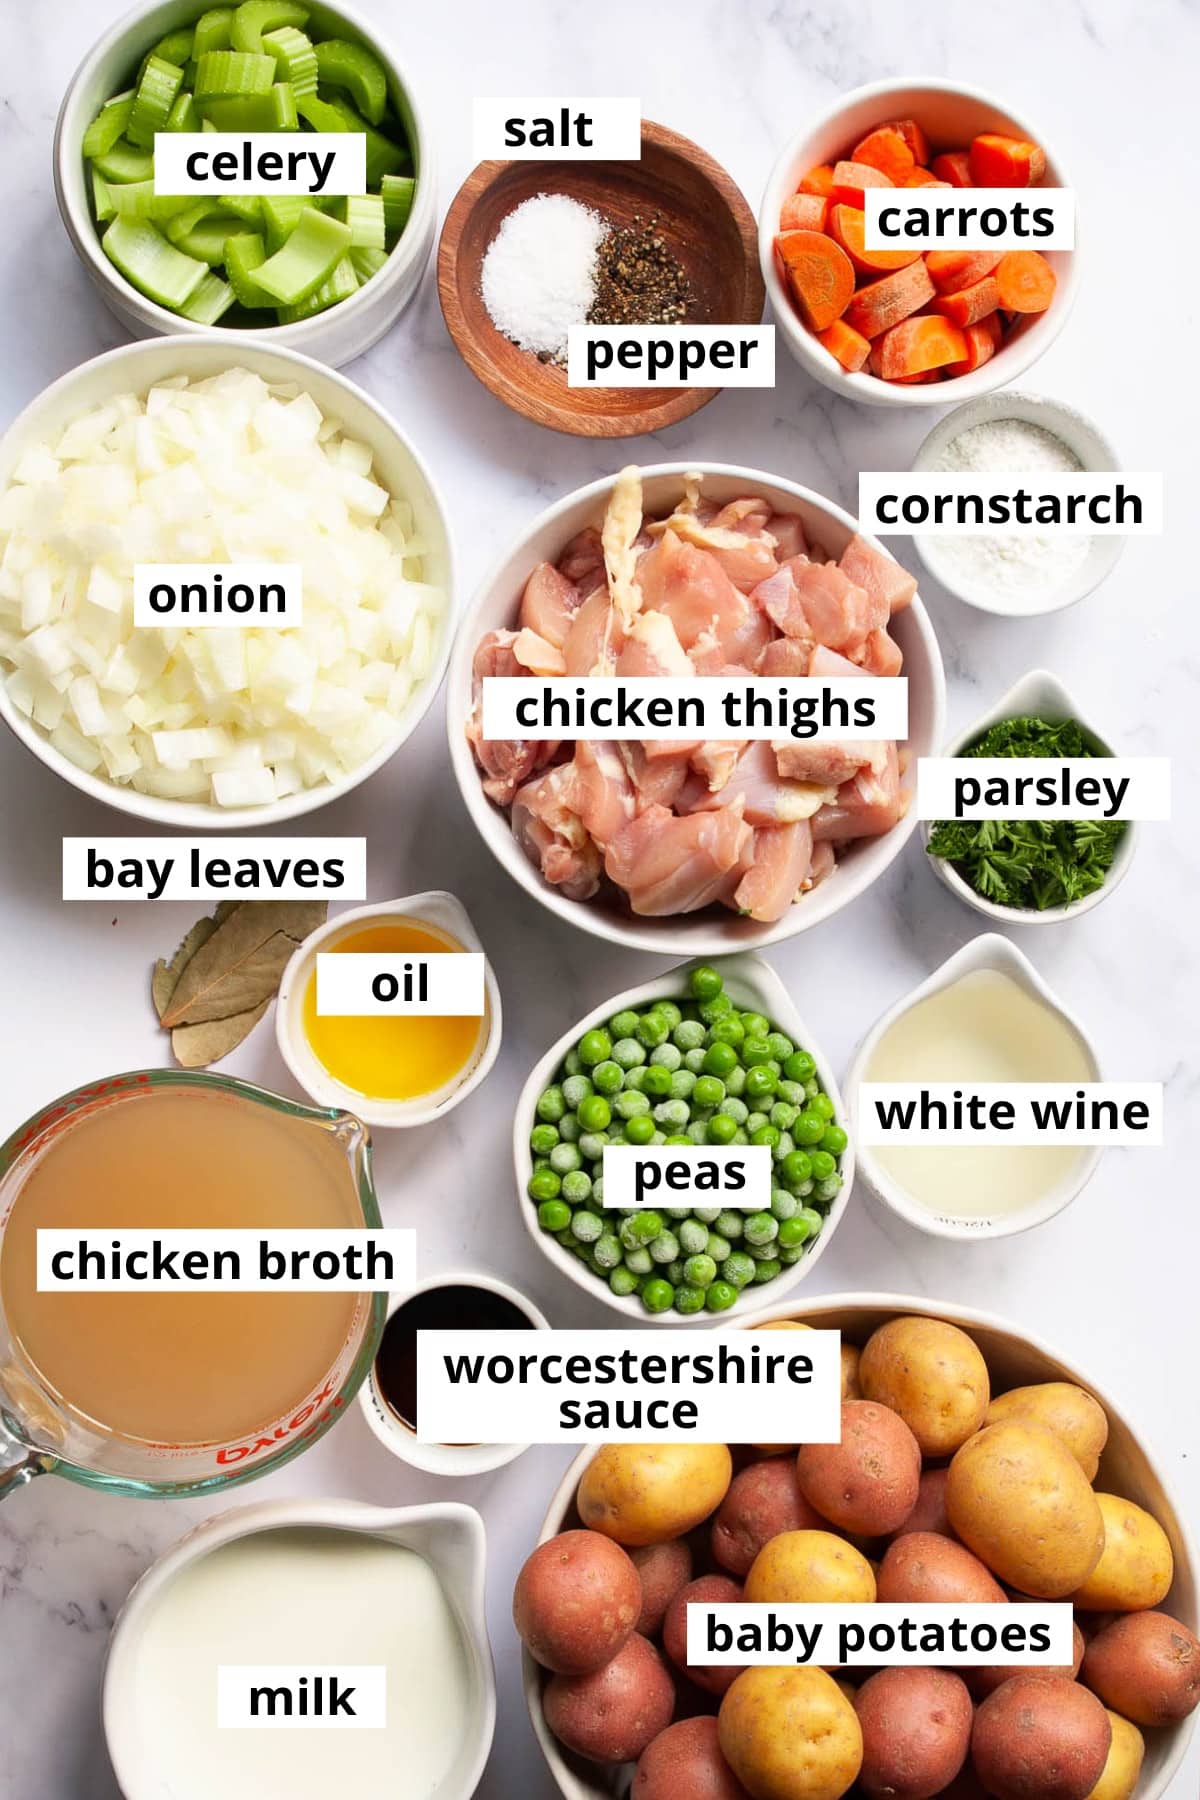 Chicken thighs, onion, celery, carrots, salt, pepper, cornstarch, parsley, bay leaves, oil, peas, white wine, chicken broth, Worcestershire, baby potatoes, milk.